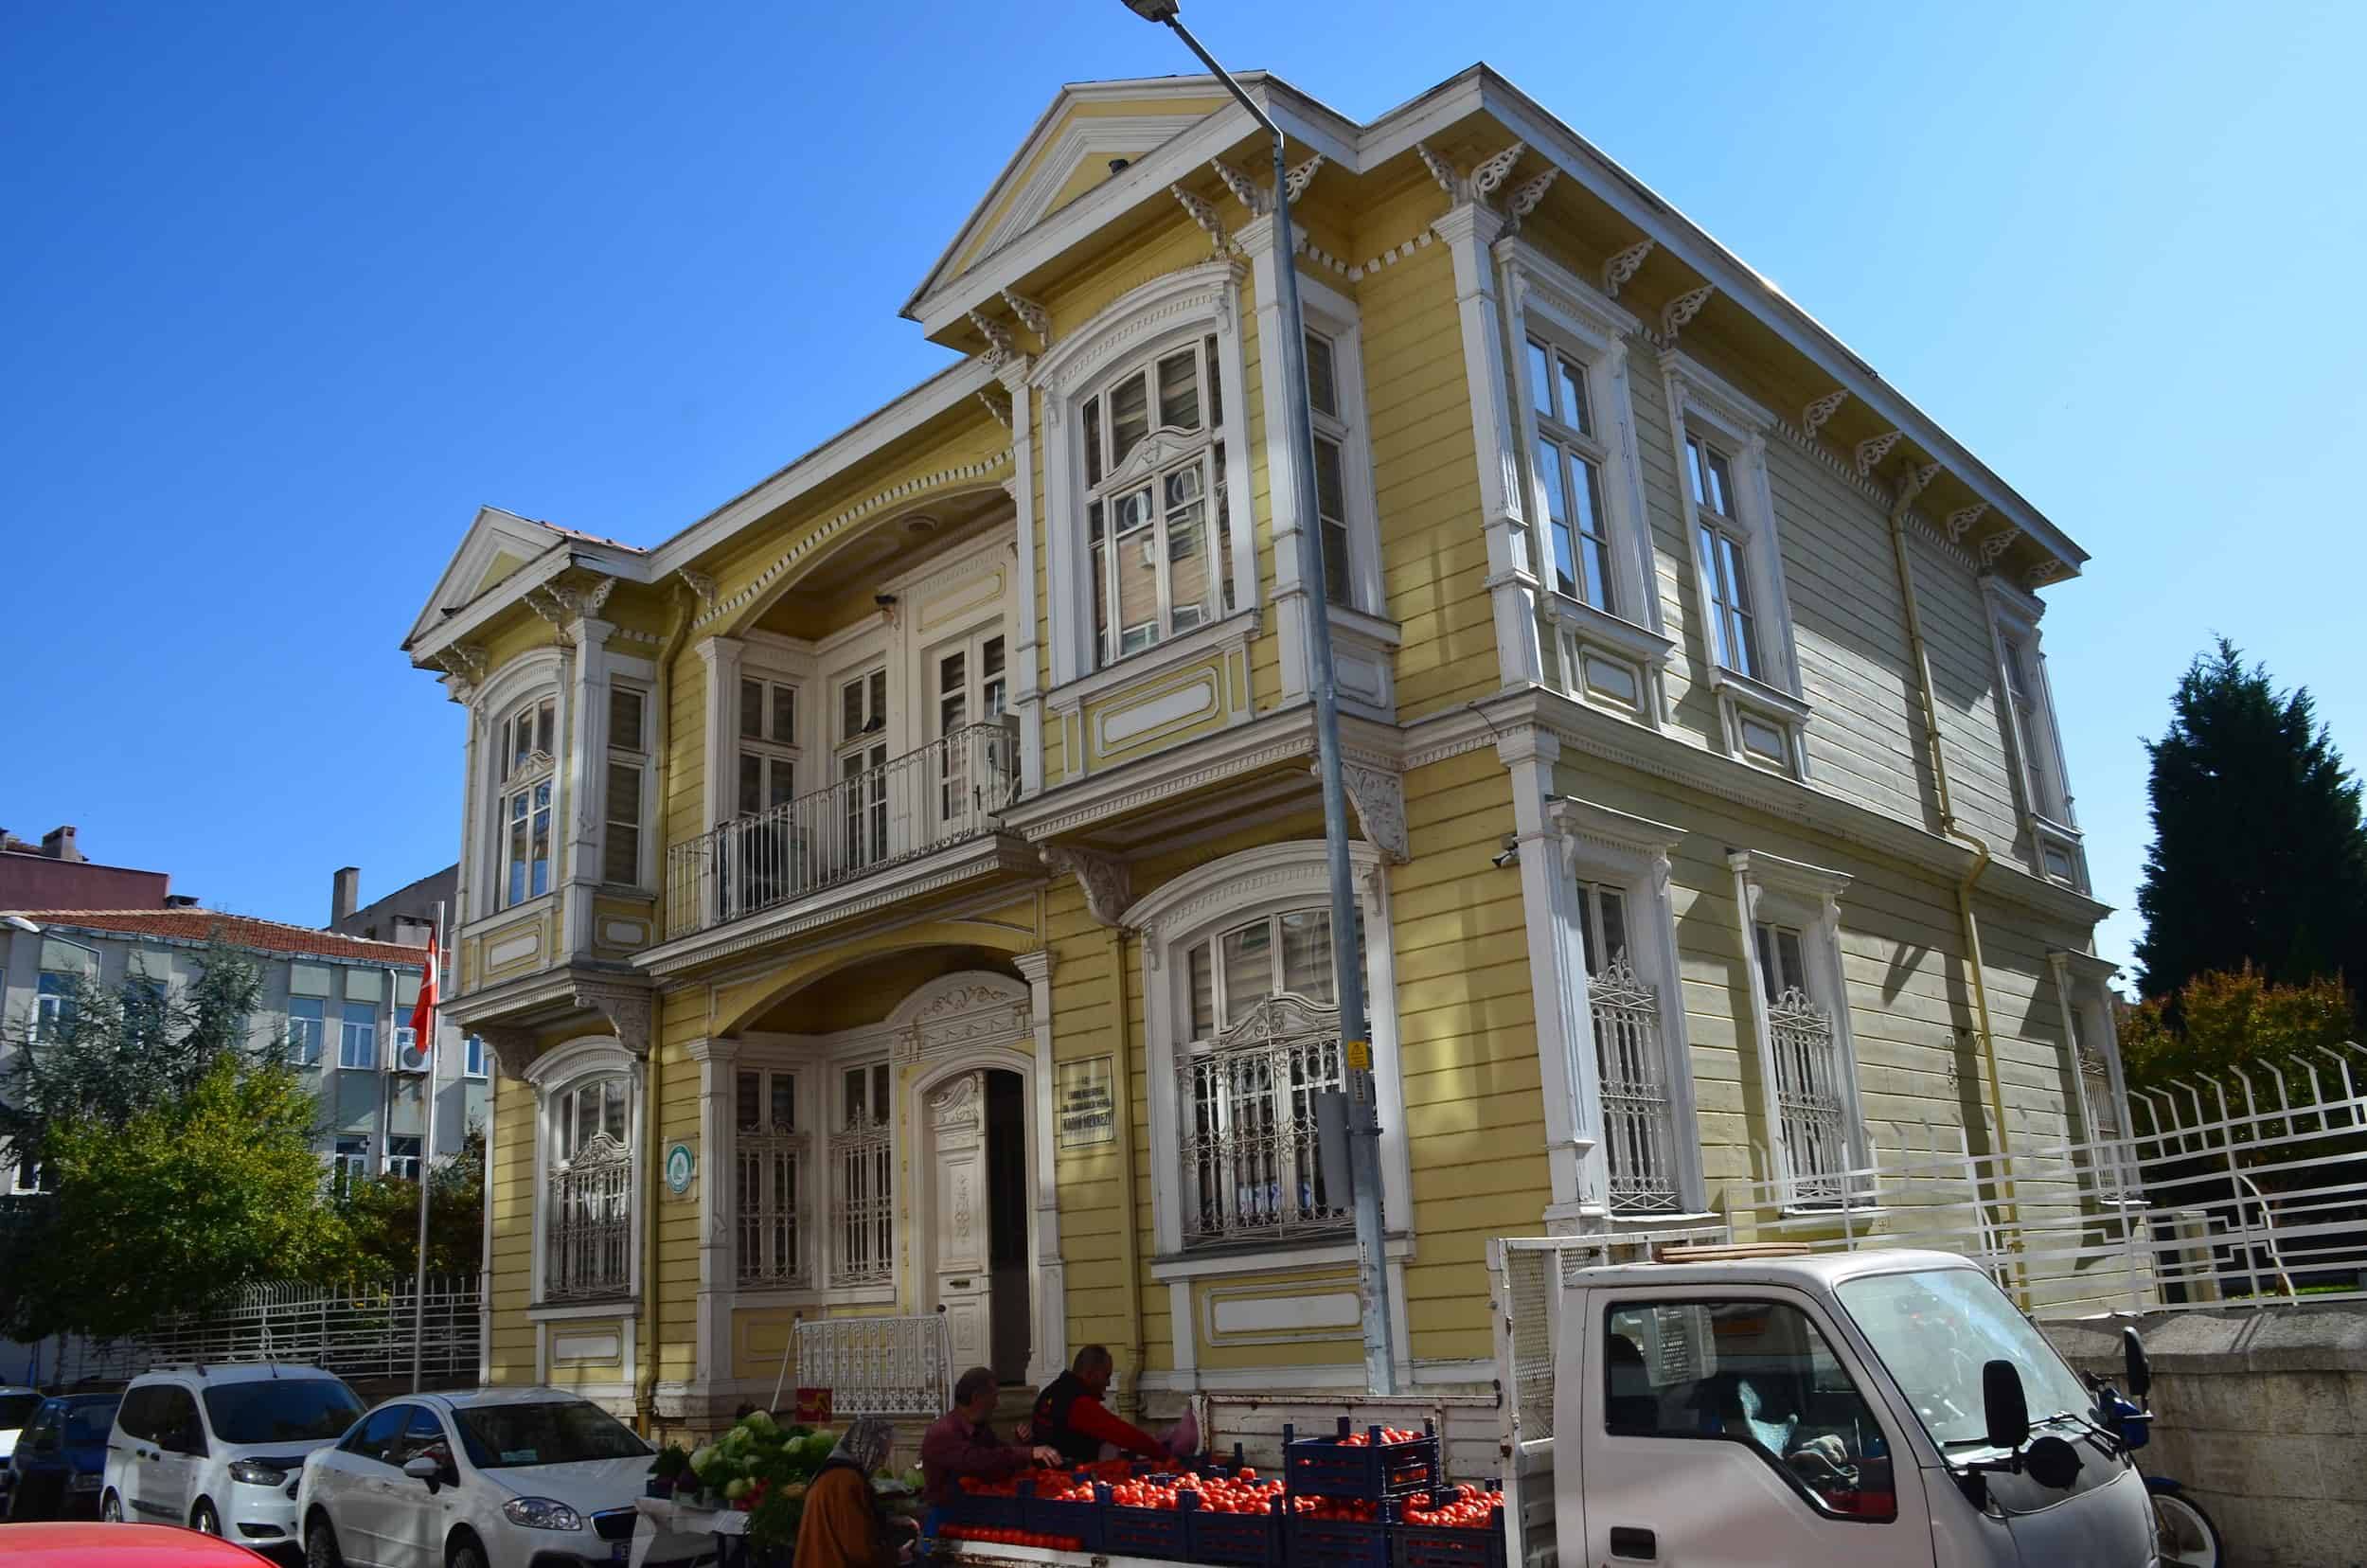 Ottoman home in Kaleiçi, Edirne, Turkey